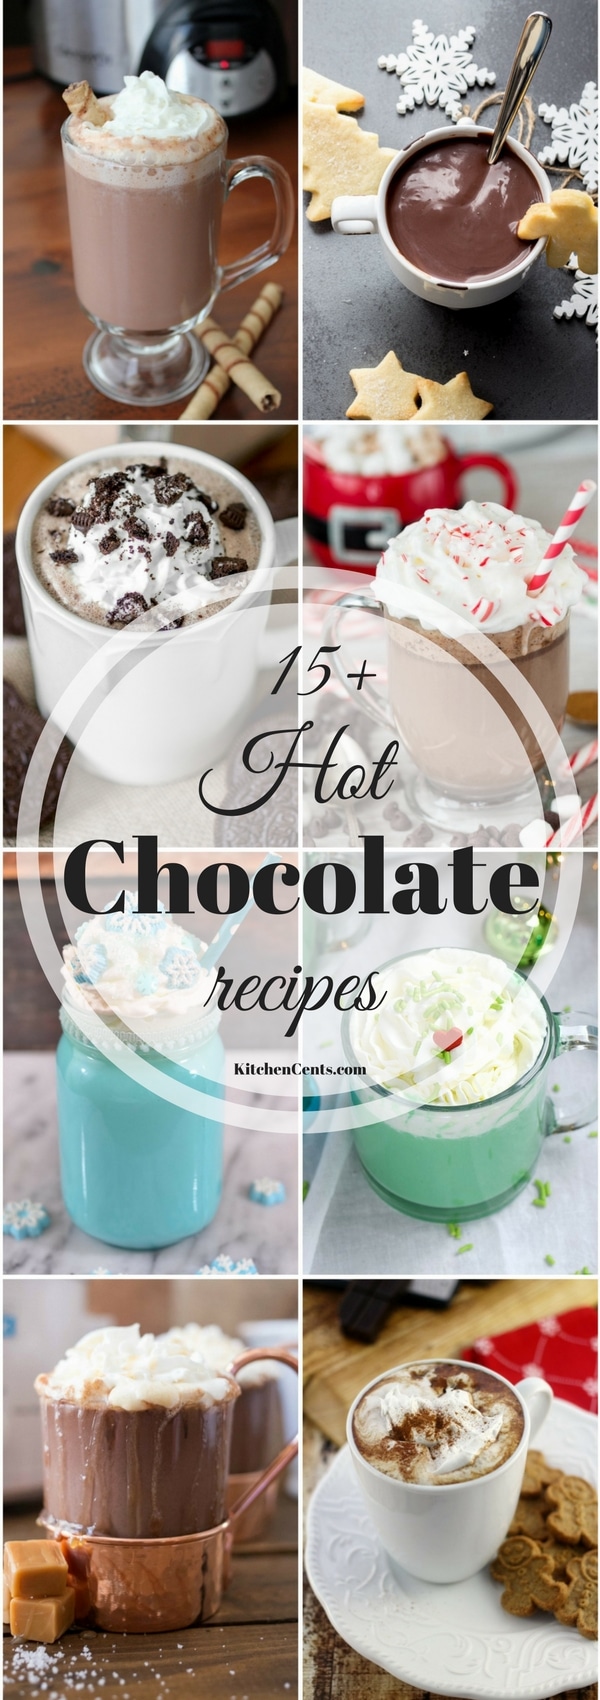 15+ Hot Chocolate recipes | KitchenCents.com